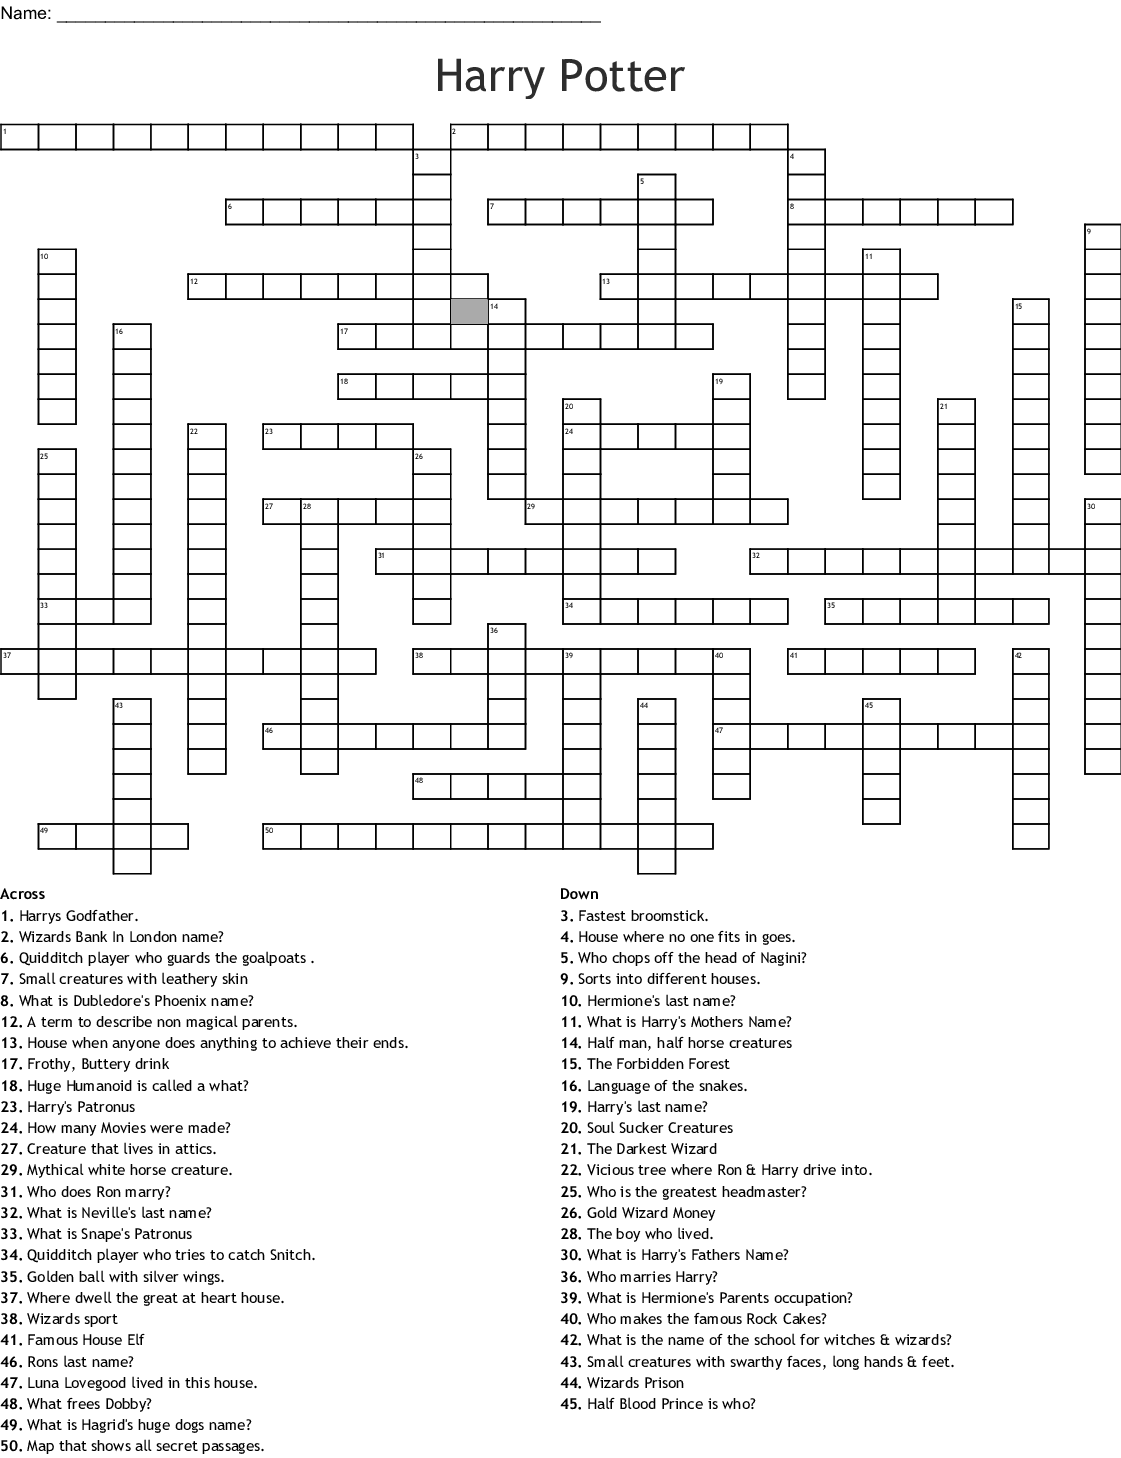 Harry Potter Crossword Puzzle Printable Printable Crossword Puzzles